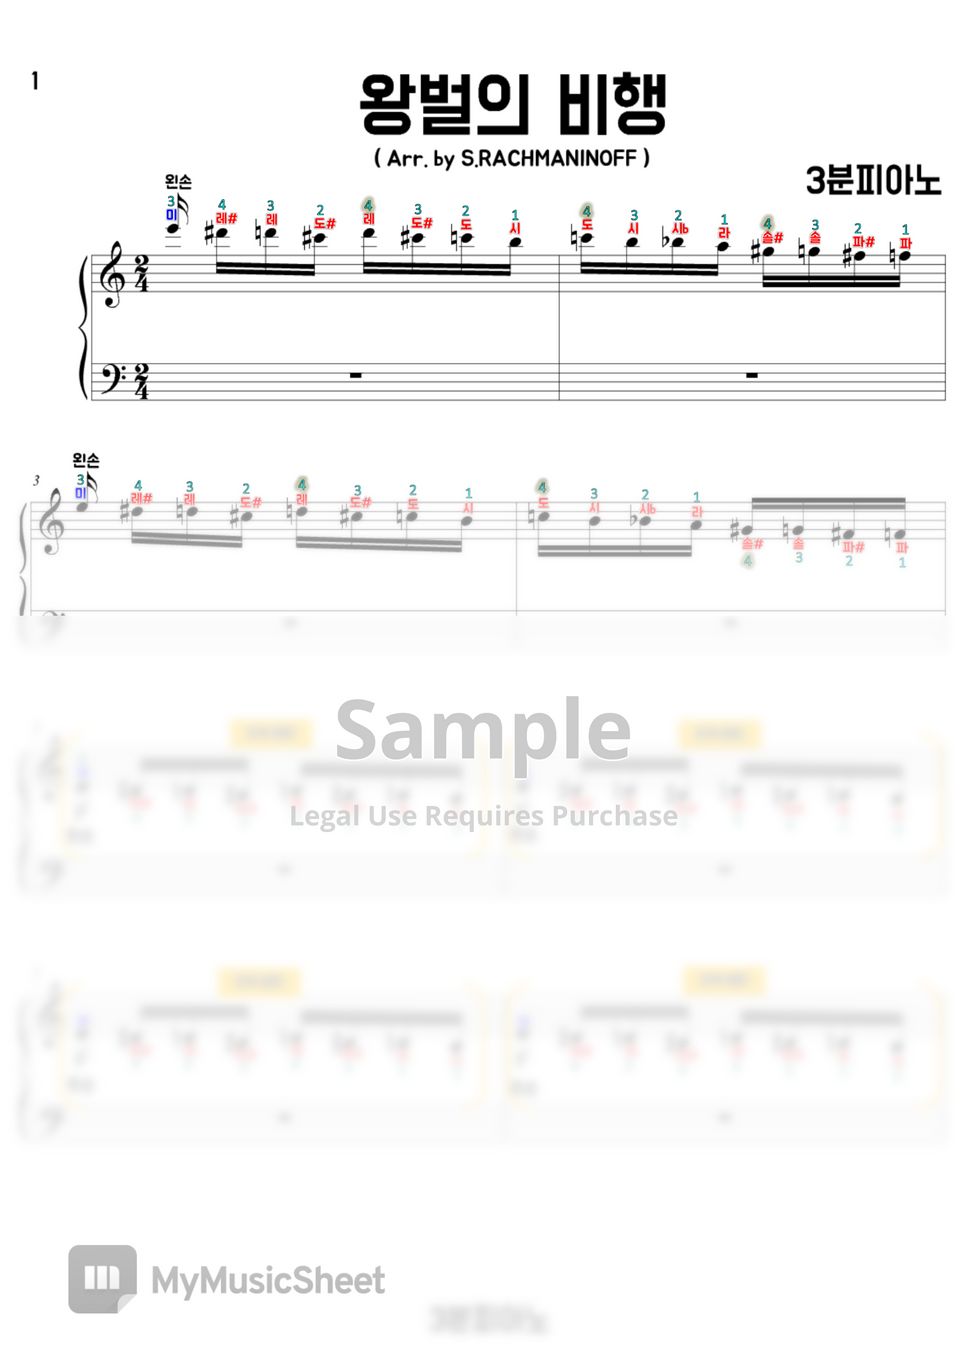 Rachmaninoff - The Bumble Bee 왕벌의 비행 (계이름악보만) by 3분피아노